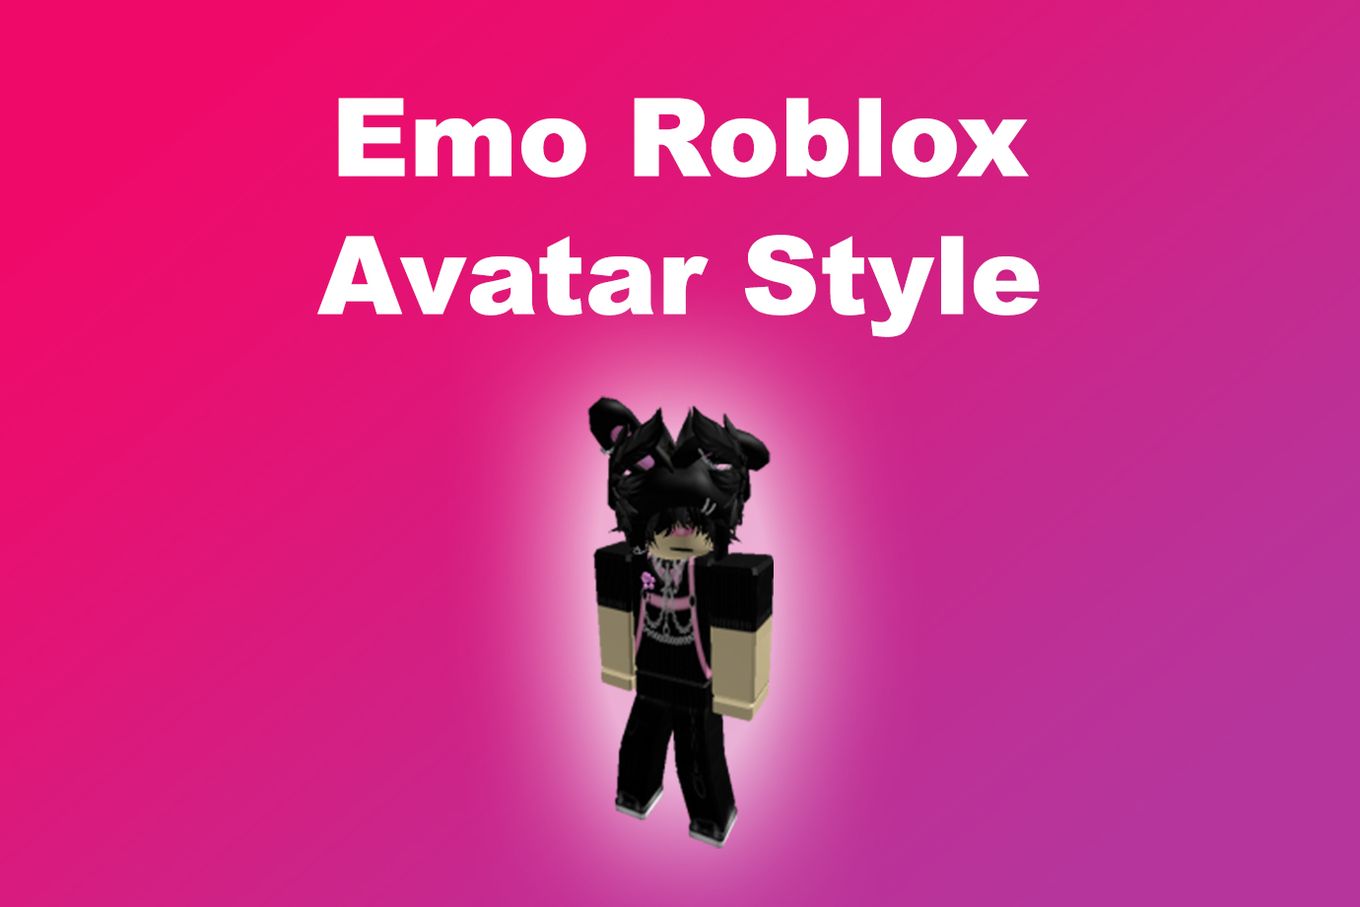 Emo Roblox Avatar Style